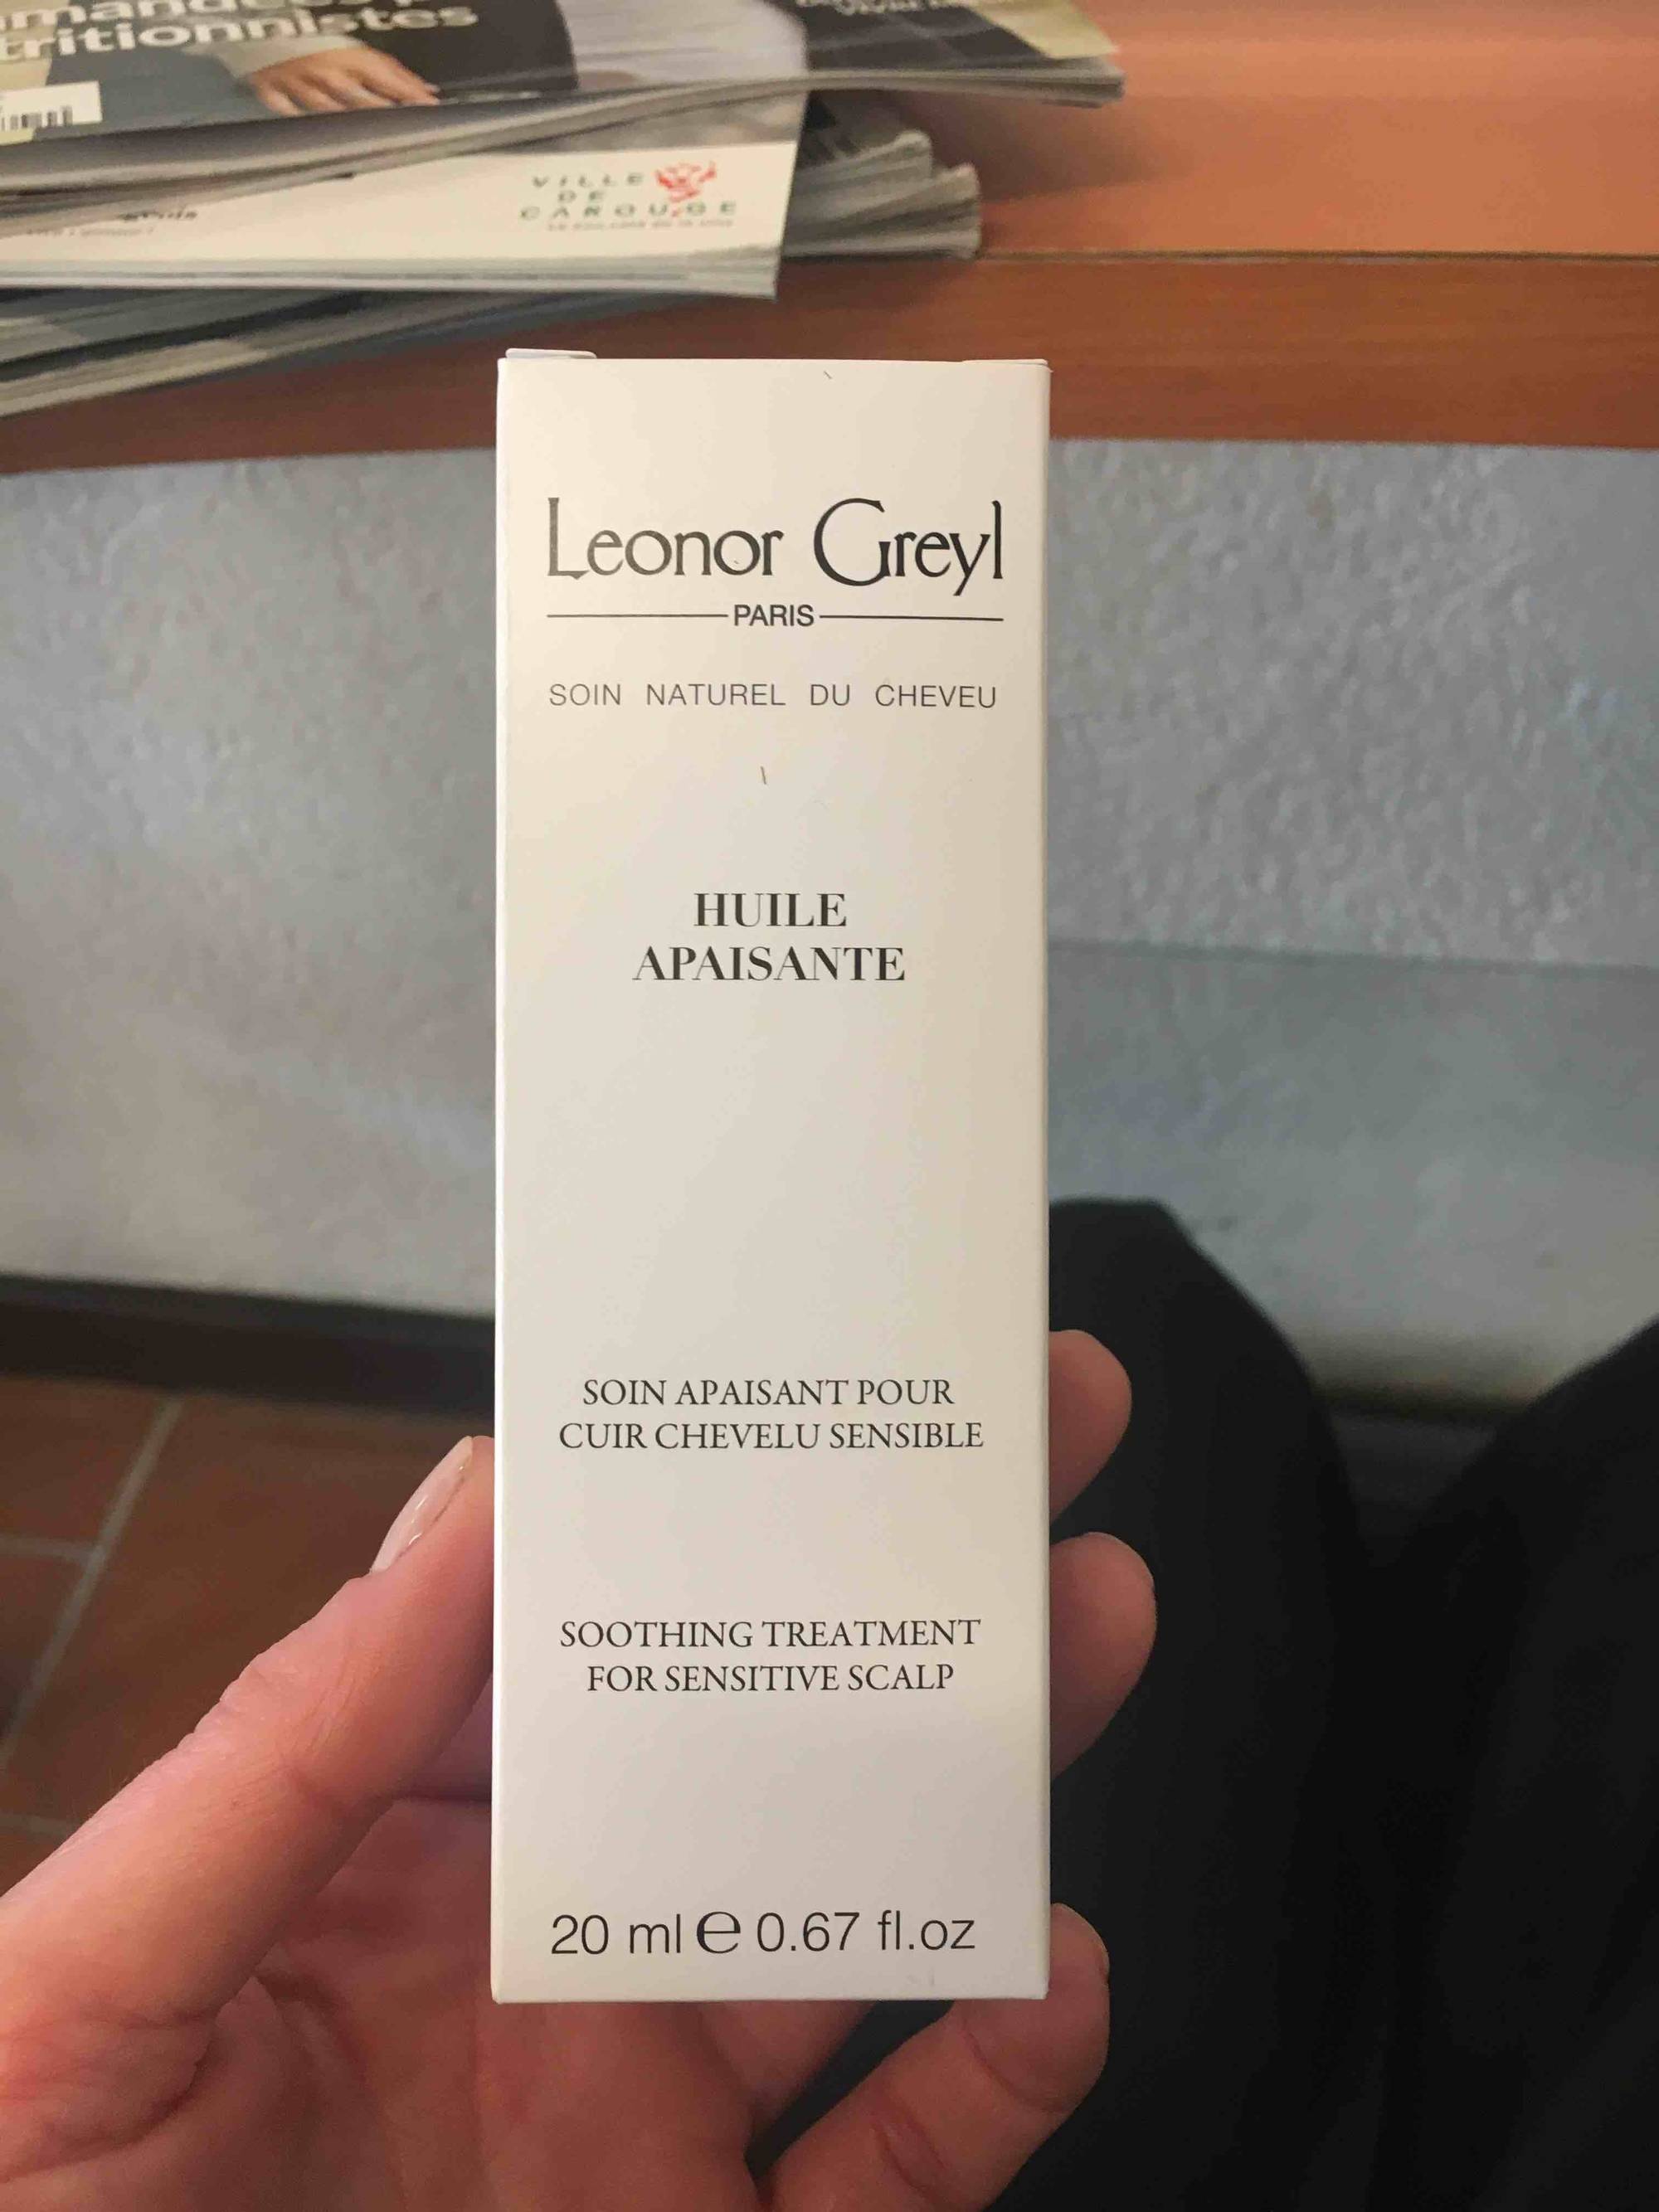 LEONOR GREYL PARIS - Soin naturel du cheveu - Huile apaisante